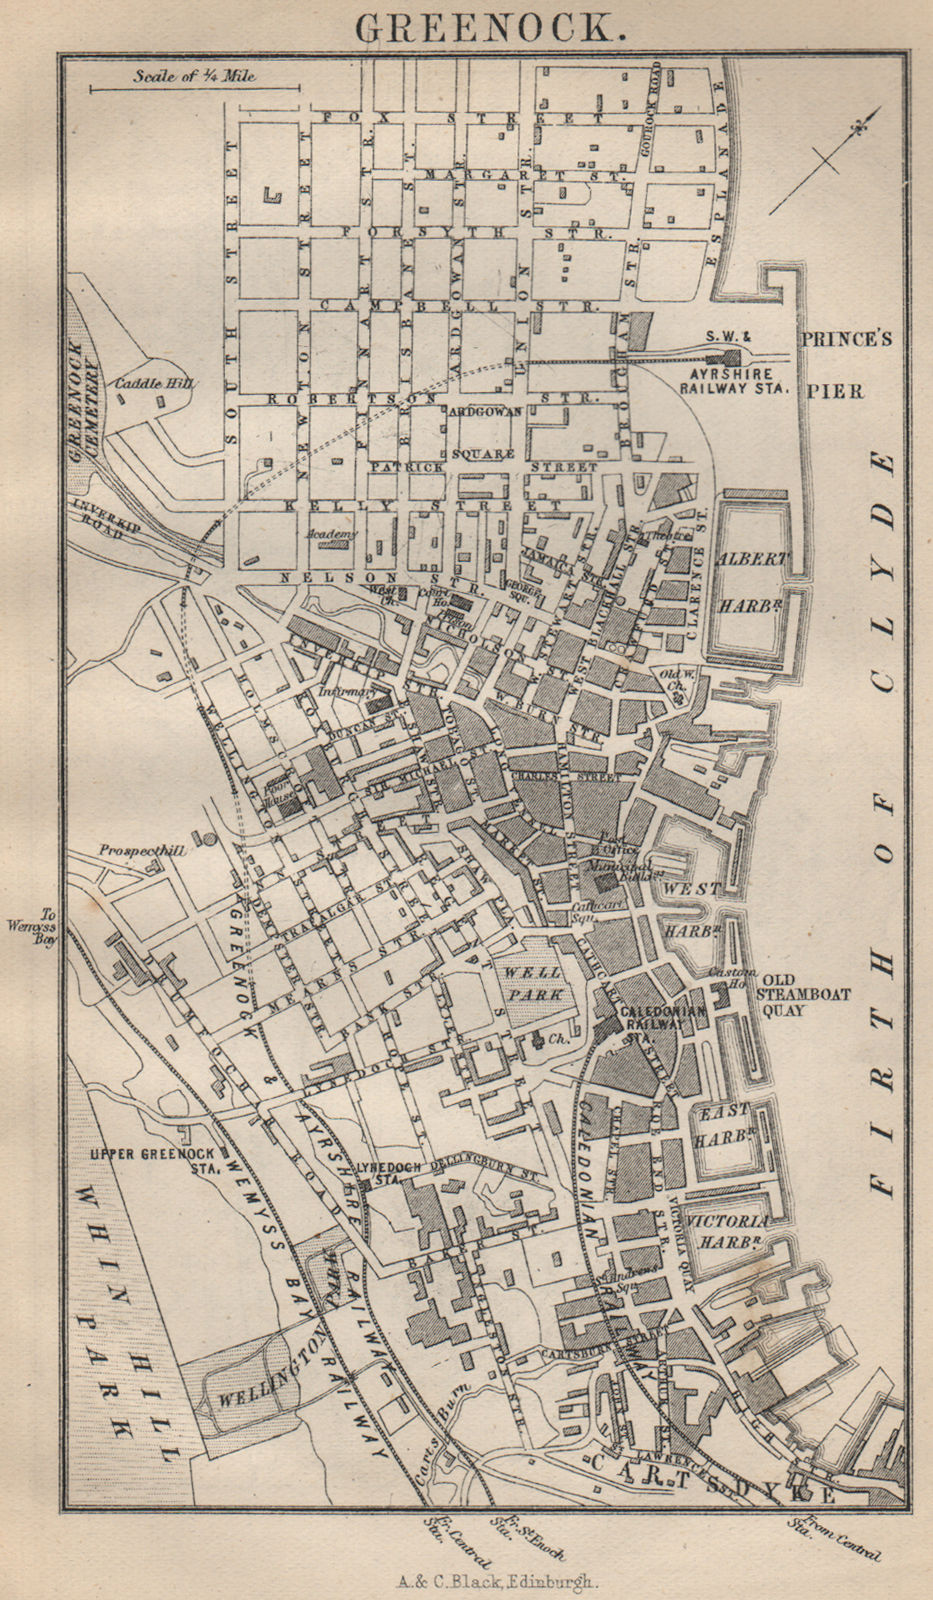 GREENOCK antique town city plan. Scotland 1886 old map chart